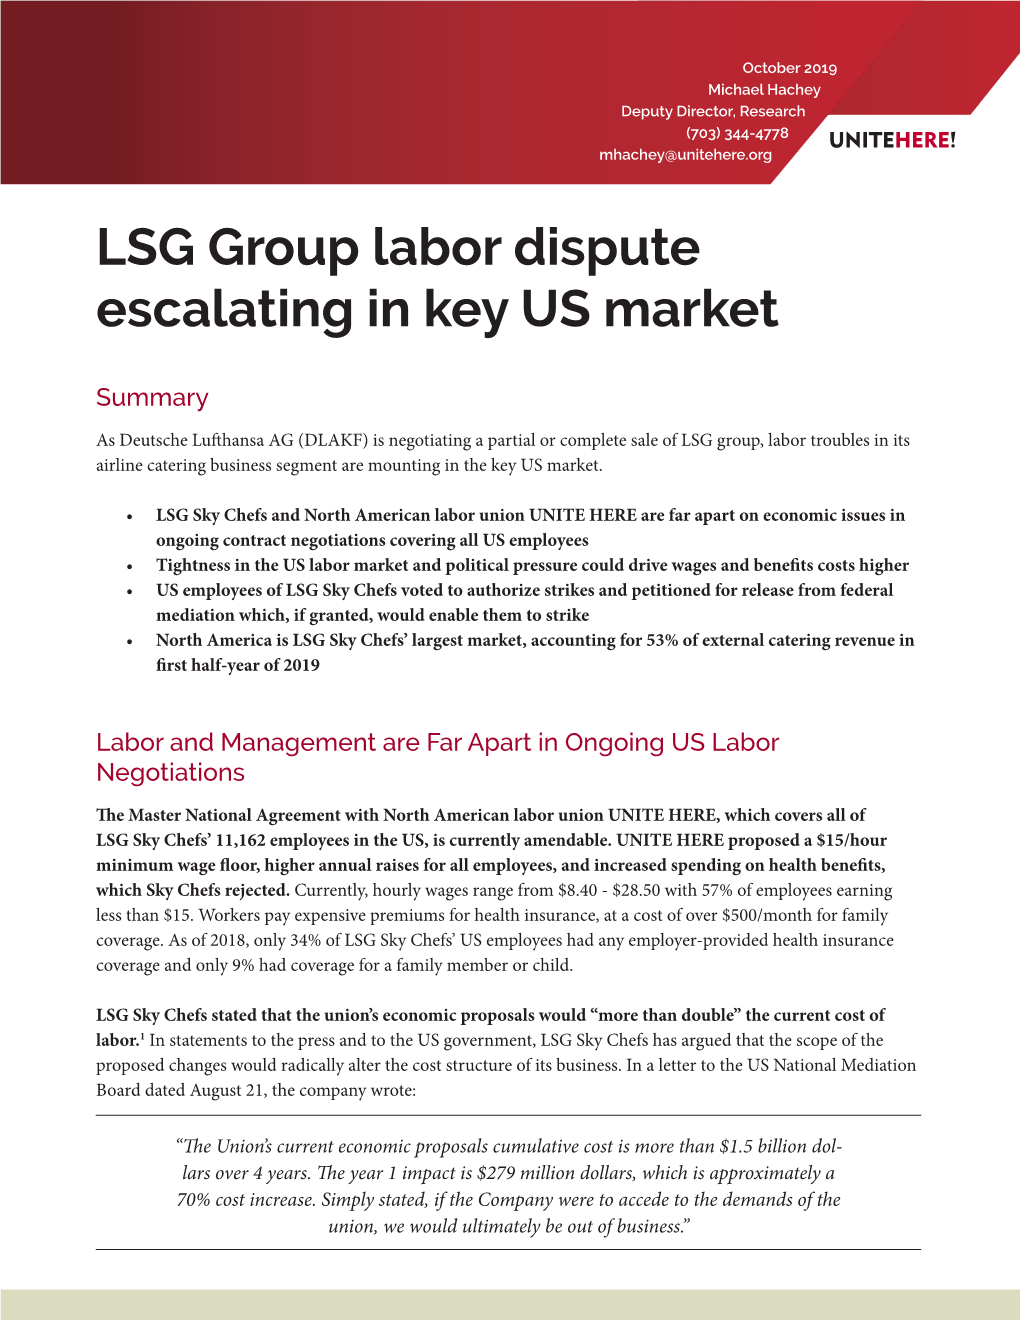 LSG Group Labor Dispute Escalating in Key US Market